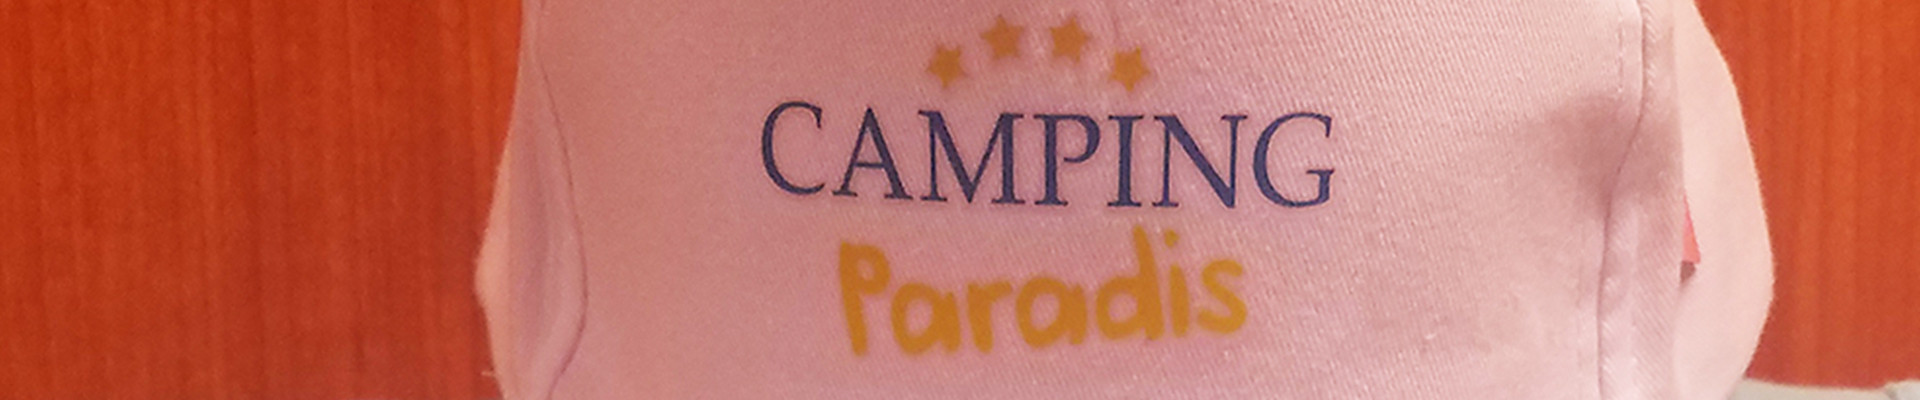 Camping Paradis-Produkte